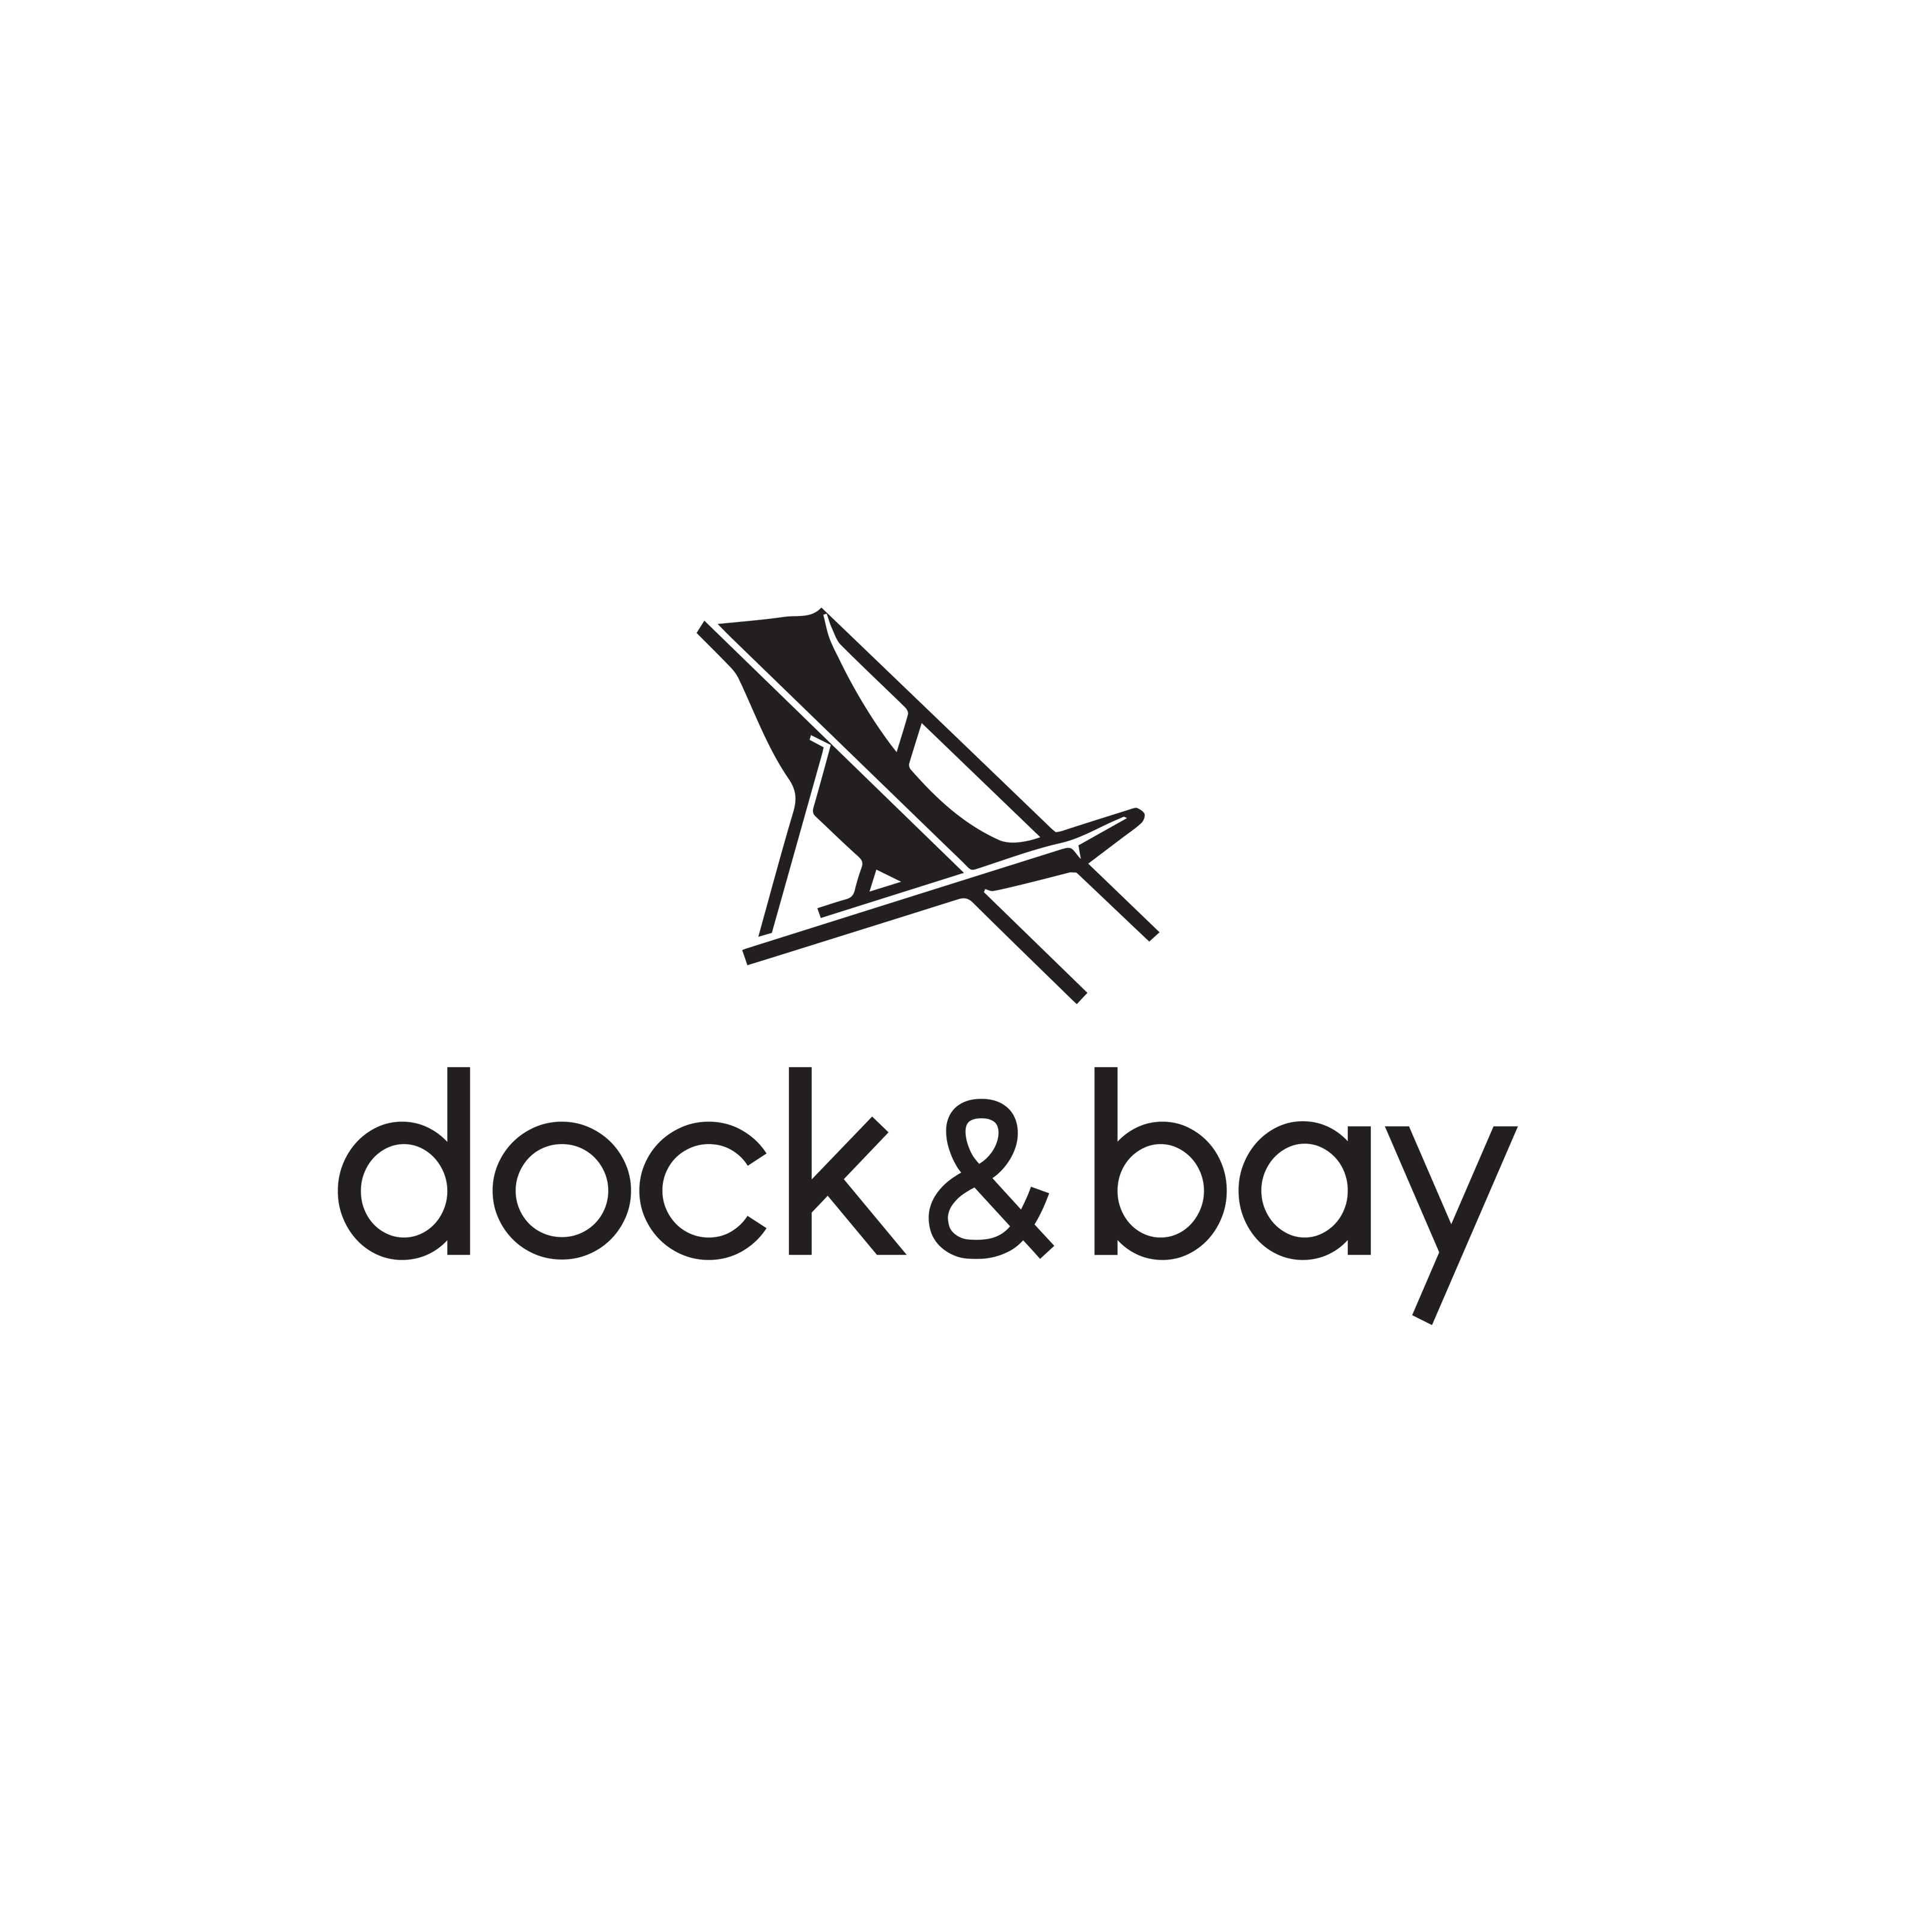 Dock And Bay logo